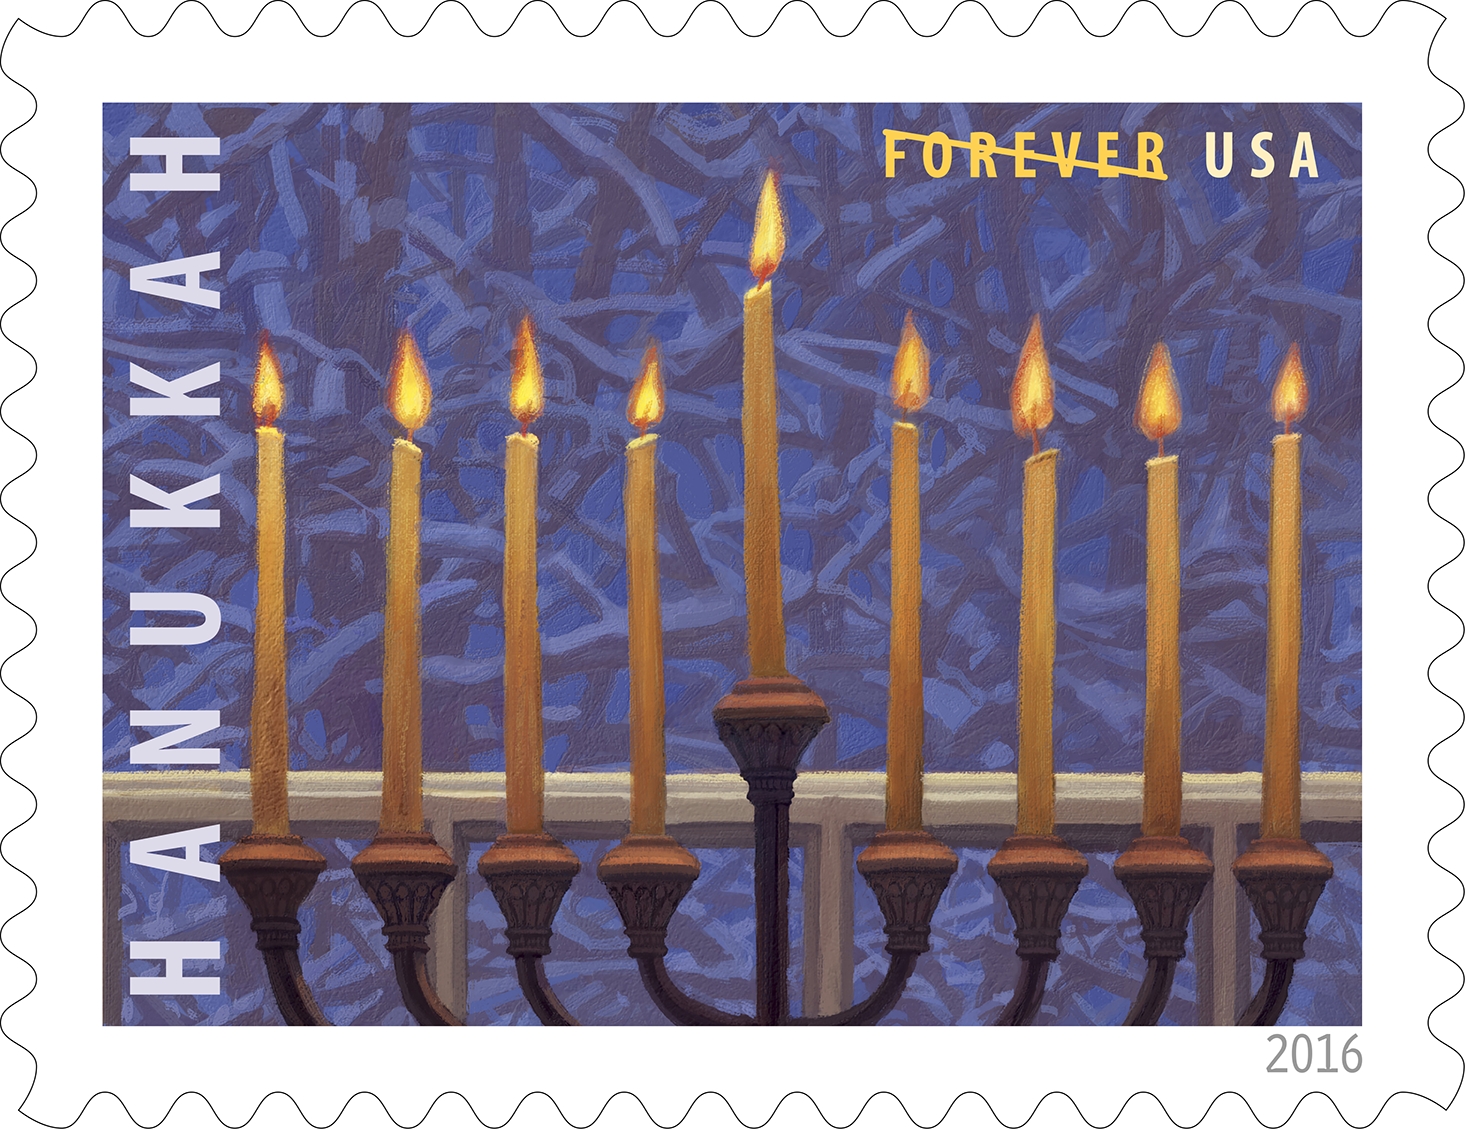 Hanukkah (&copy; 2016 USPS)